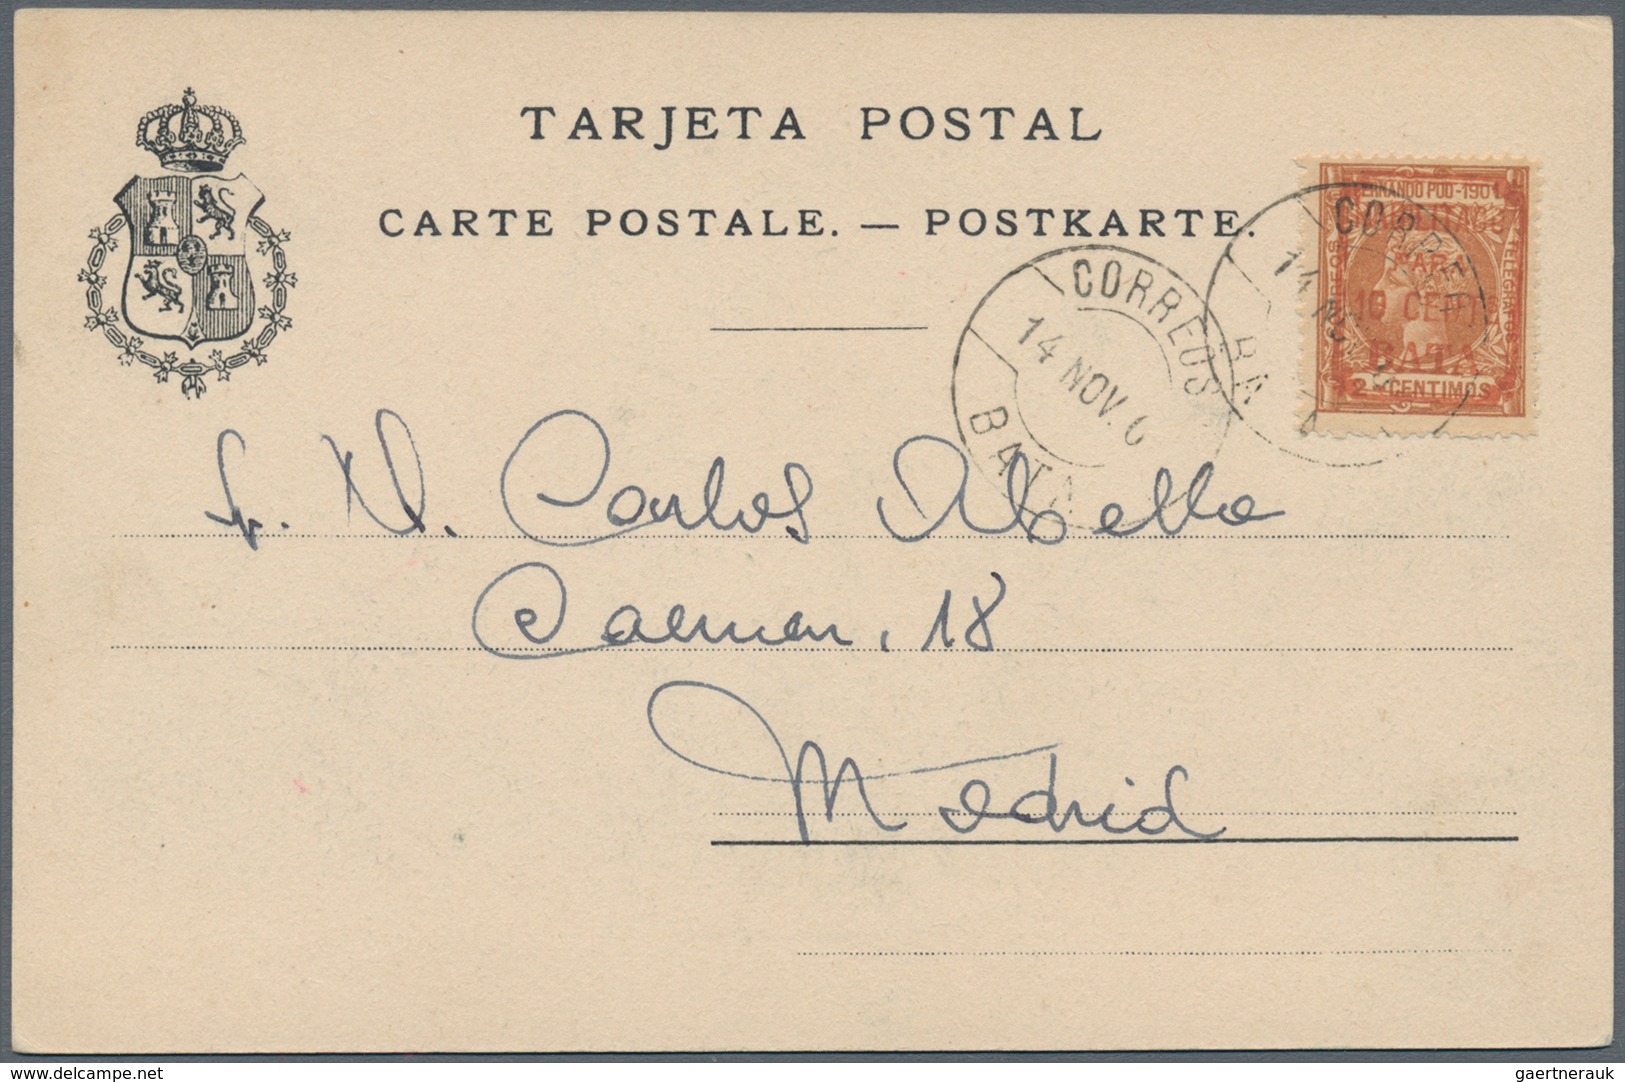 00493 Spanisch-Guinea: Bata, 1901, 1 C.-10 P. Surcharged "HABILITADO PARA 10 CENTS BATA", 14 Values Each A - Guinea Espagnole